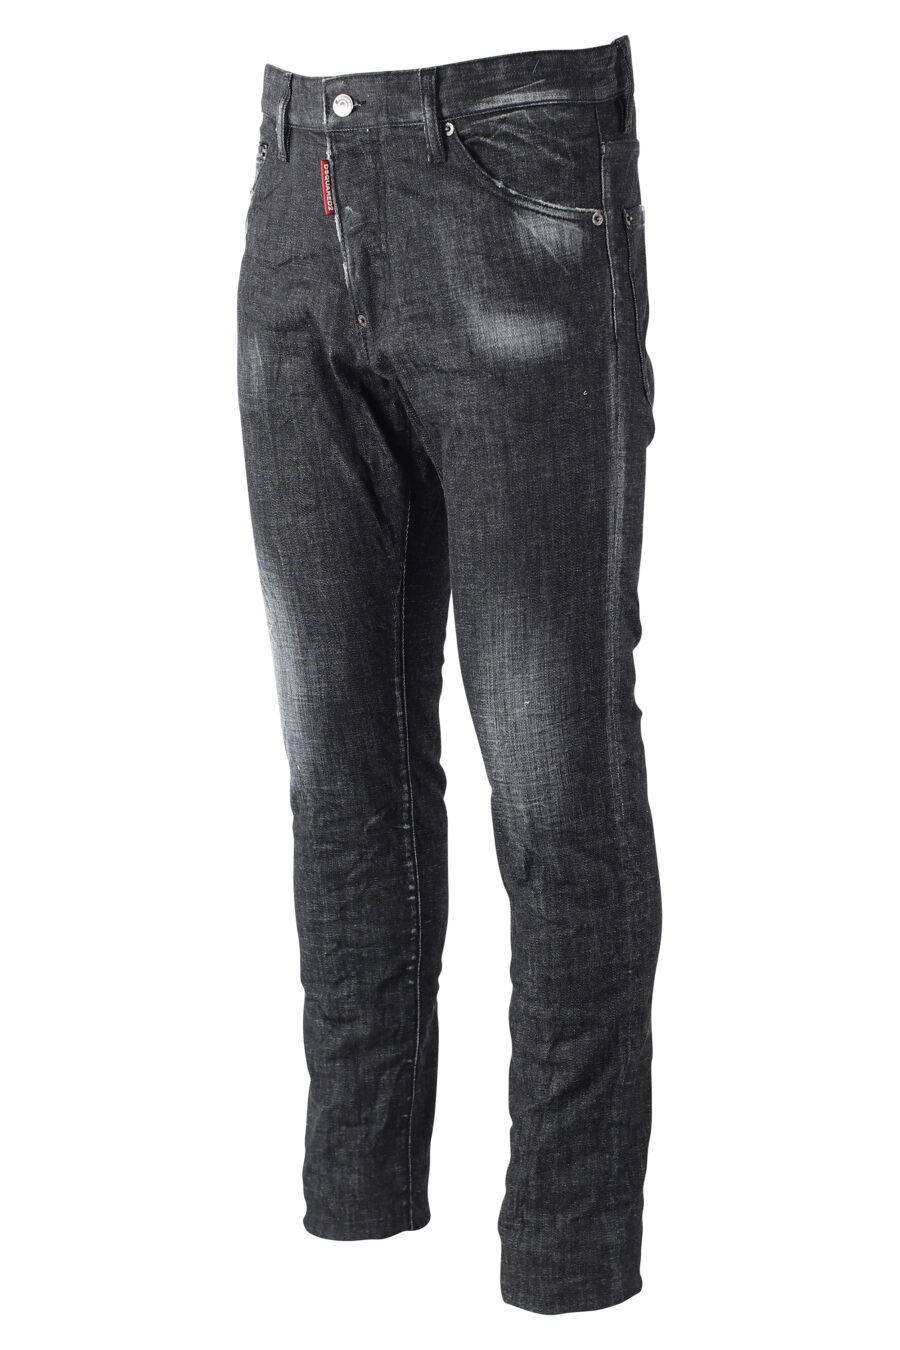 Pantalon en jean noir semi-usé - IMG 9700